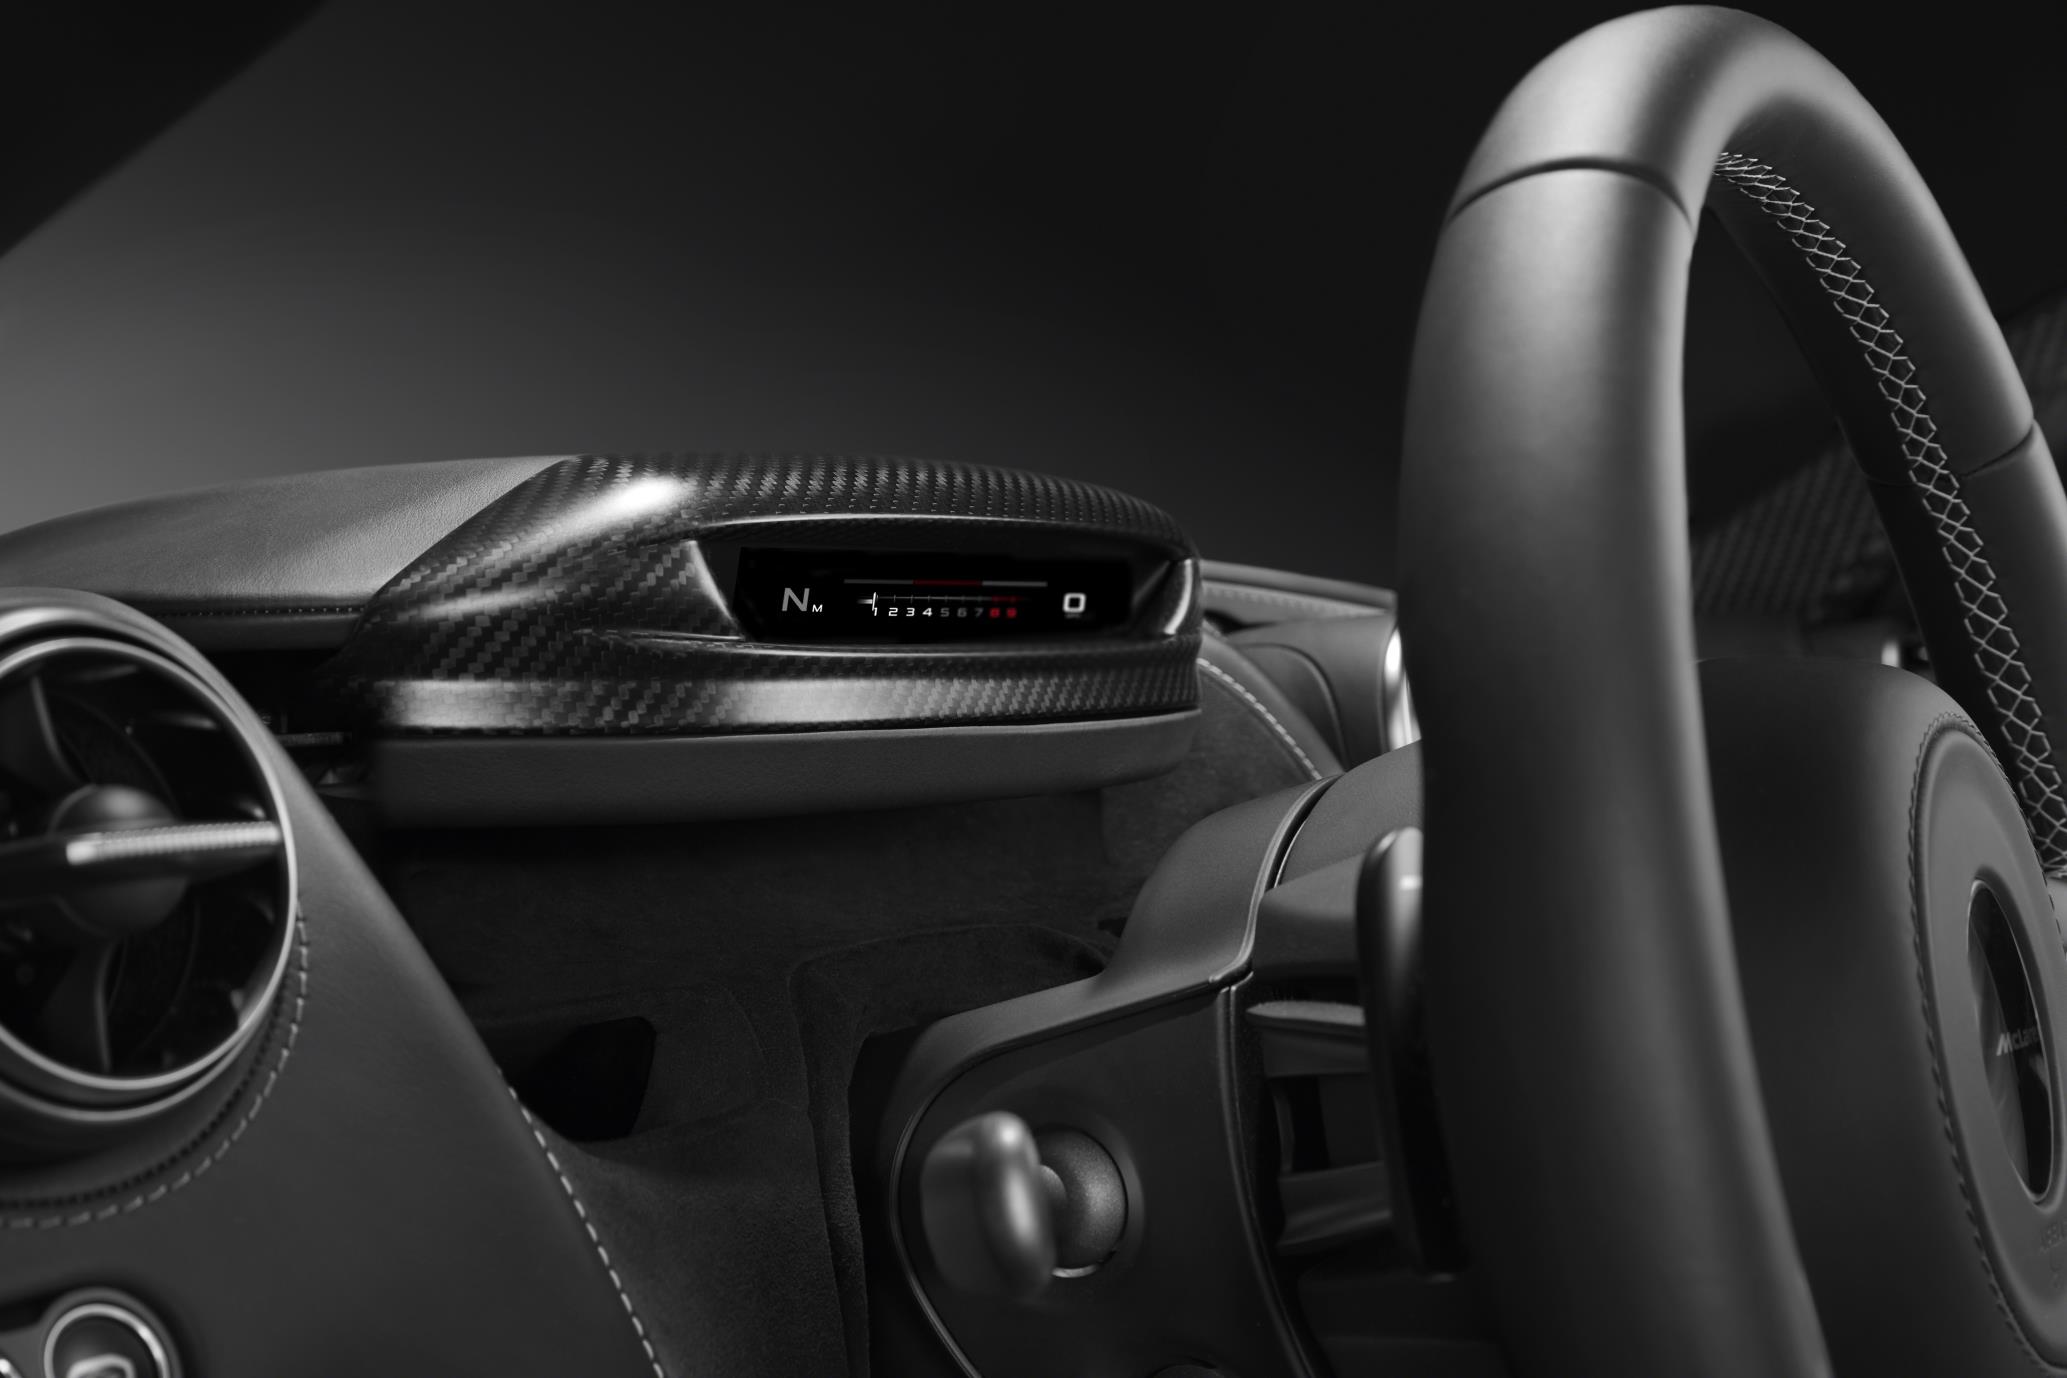 Upcoming McLaren Super Series ‘720S’ gets folding digital instrument display